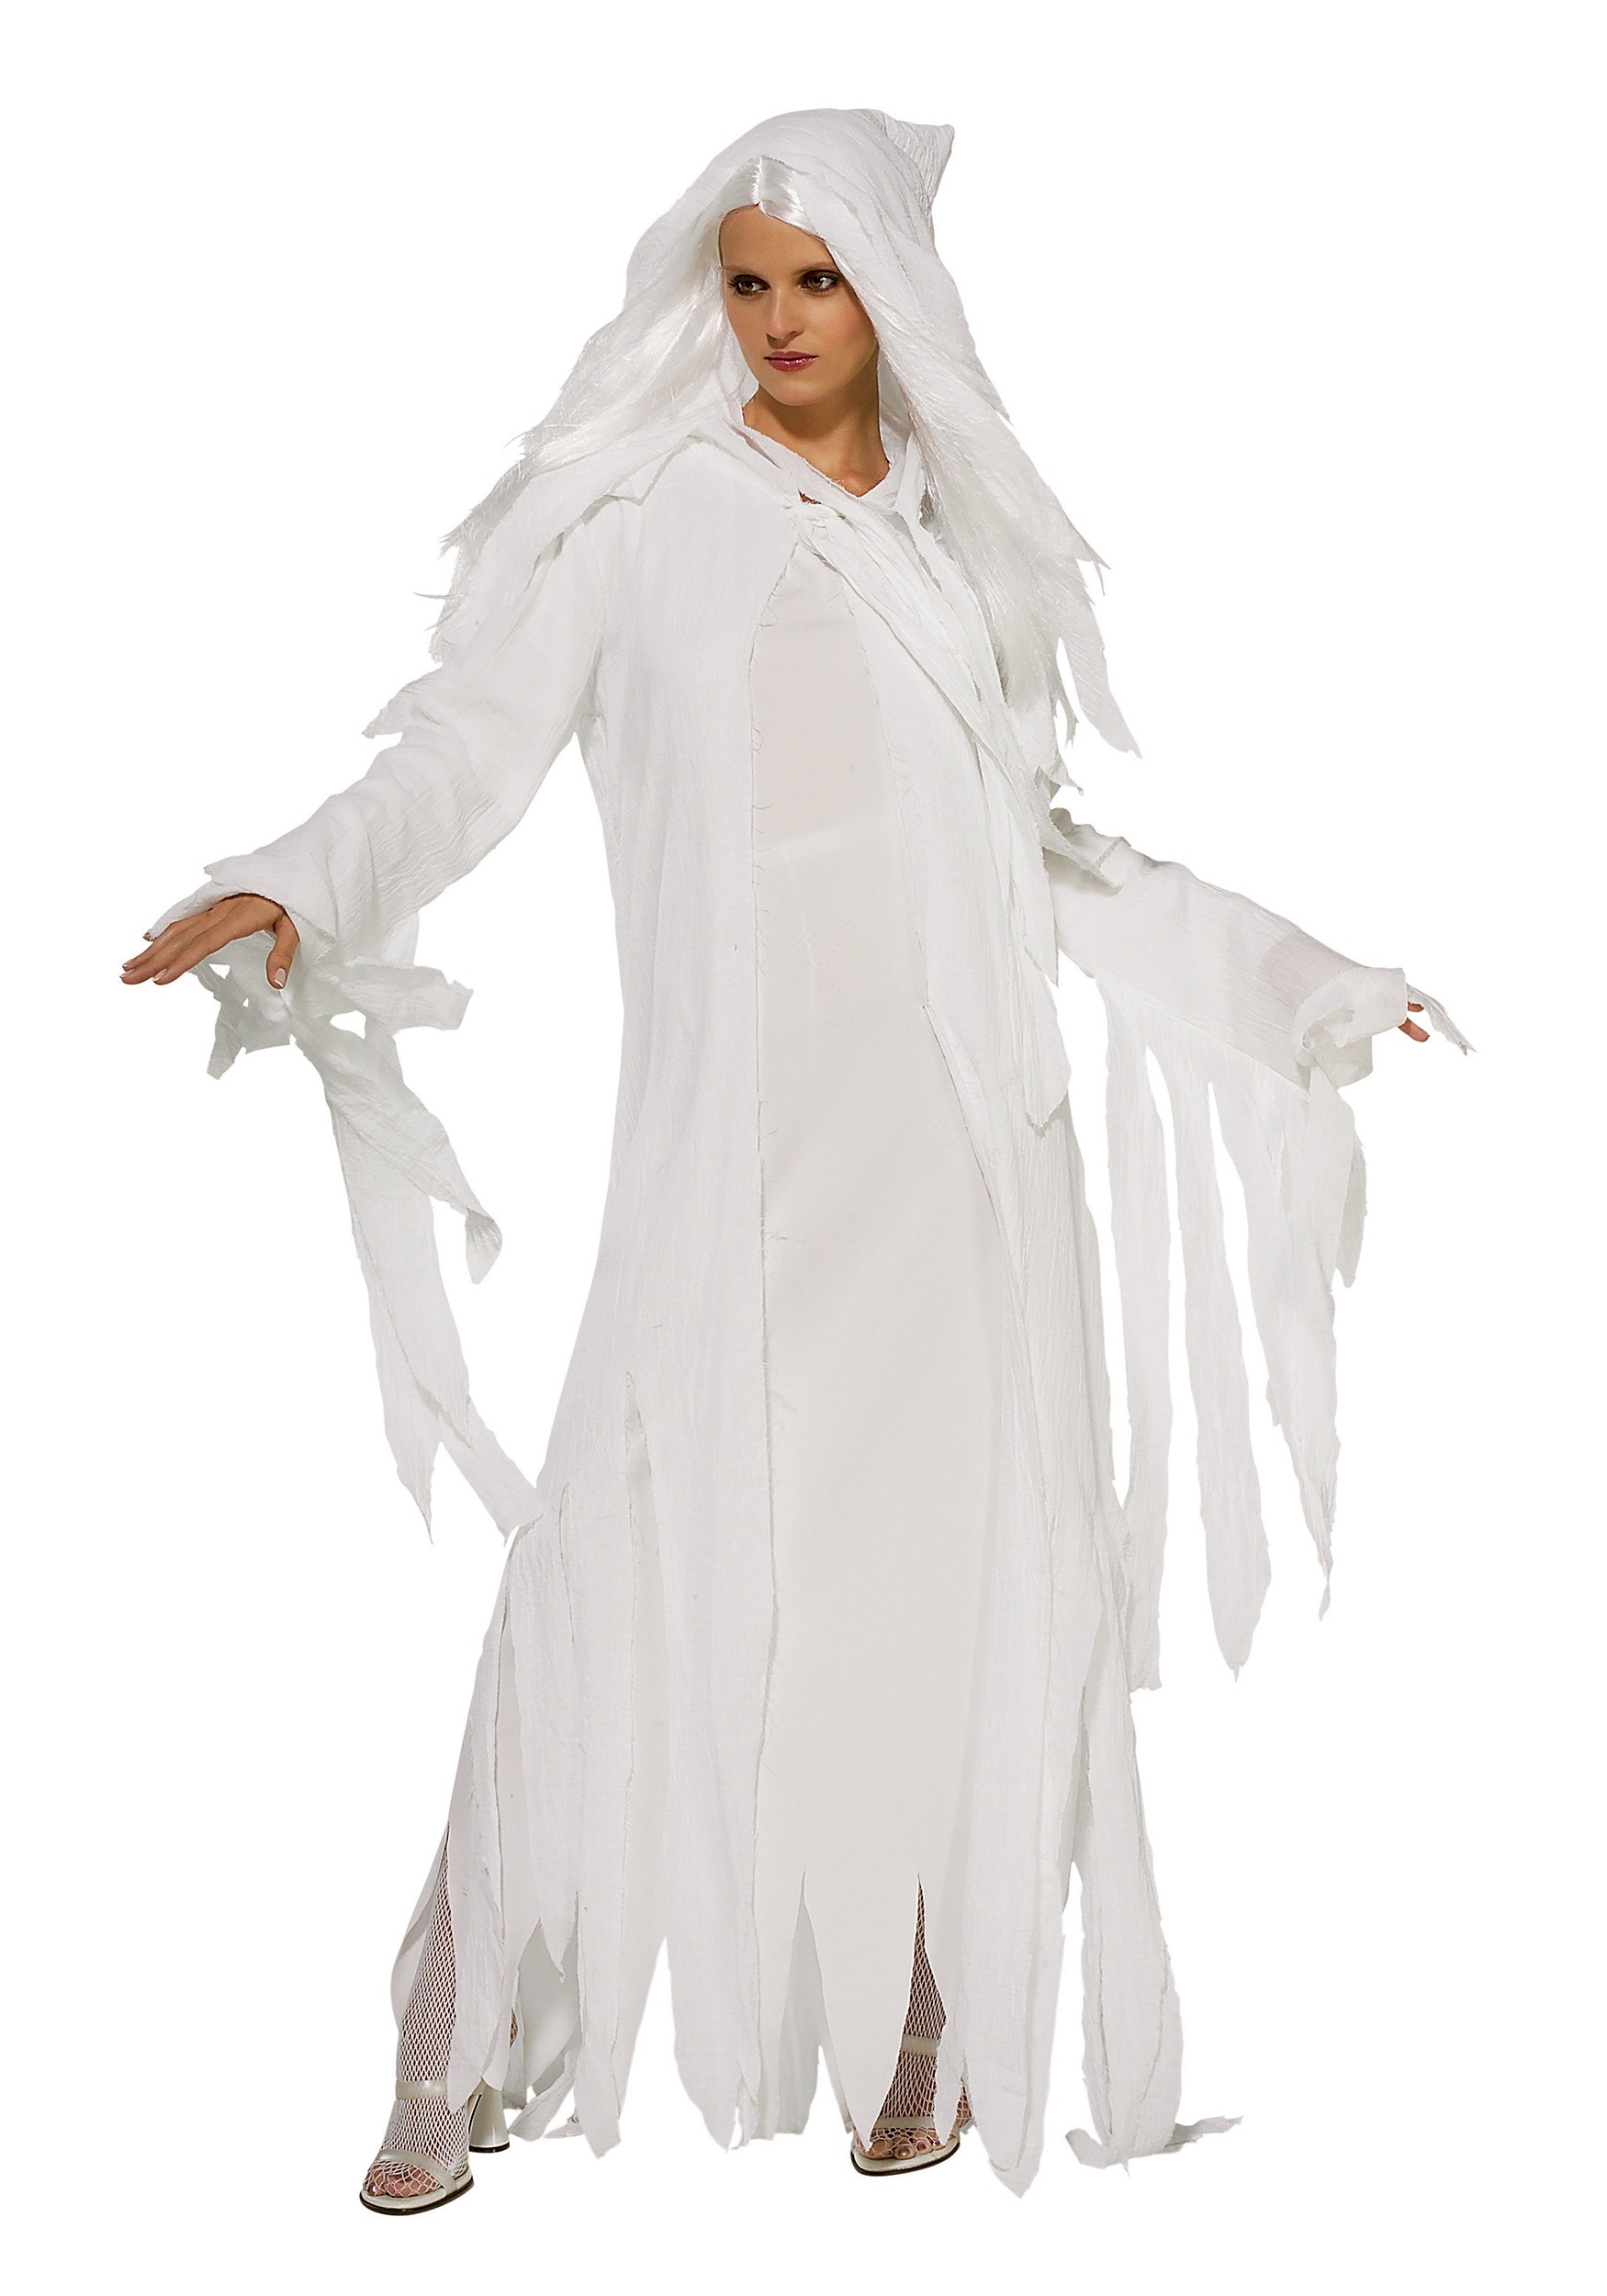 Ghostly Spirit Women’s Costume